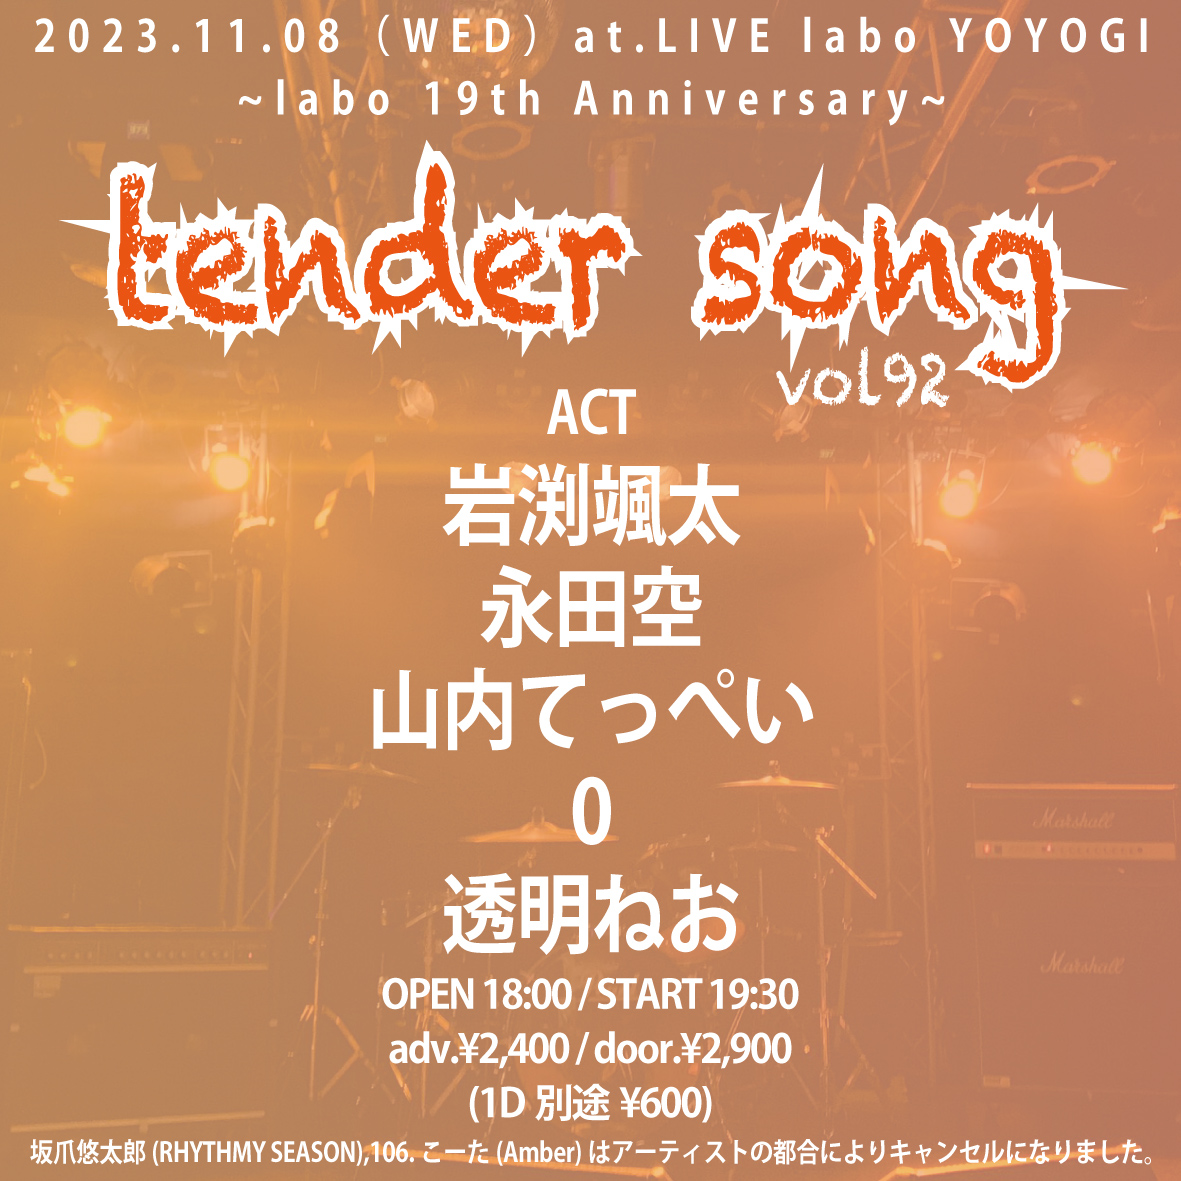 ～ labo 19th Anniversary!! ～
tender song vol.92